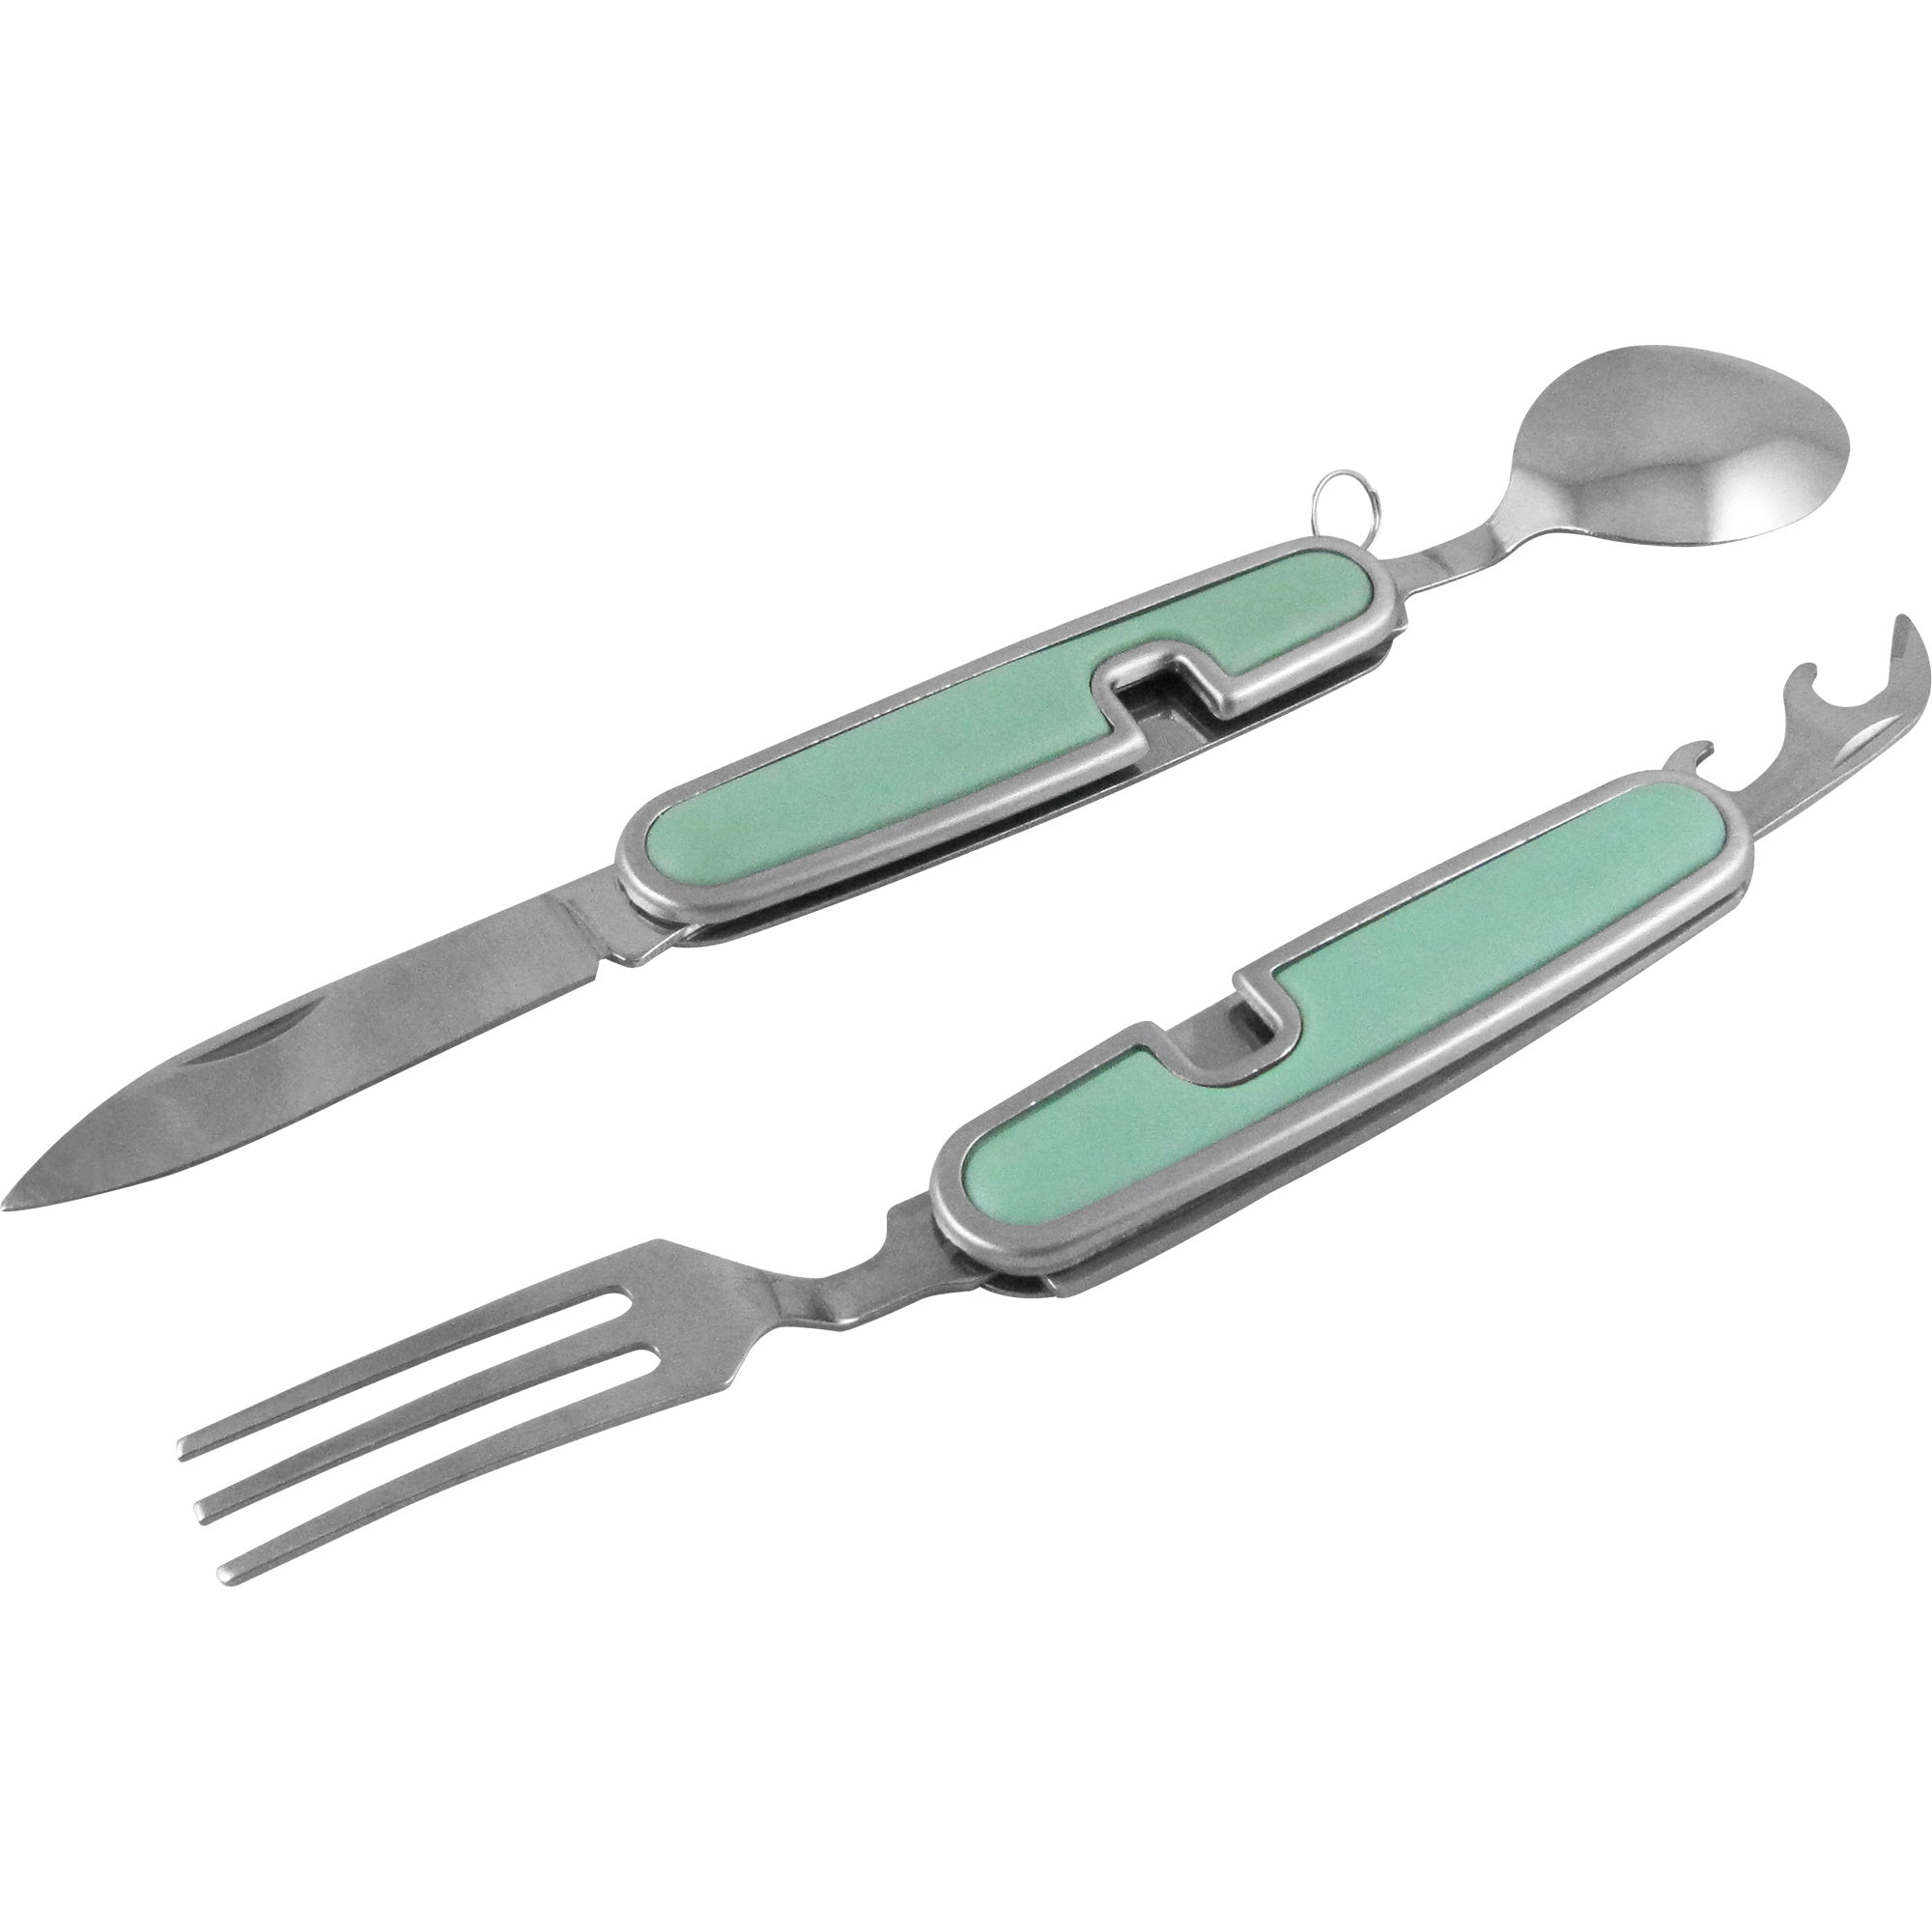 Uni-Com 67078 Folding Cutlery Set - Various Colours - Premium Penknives / Multi-Tools from Uni-Com - Just $1! Shop now at W Hurst & Son (IW) Ltd